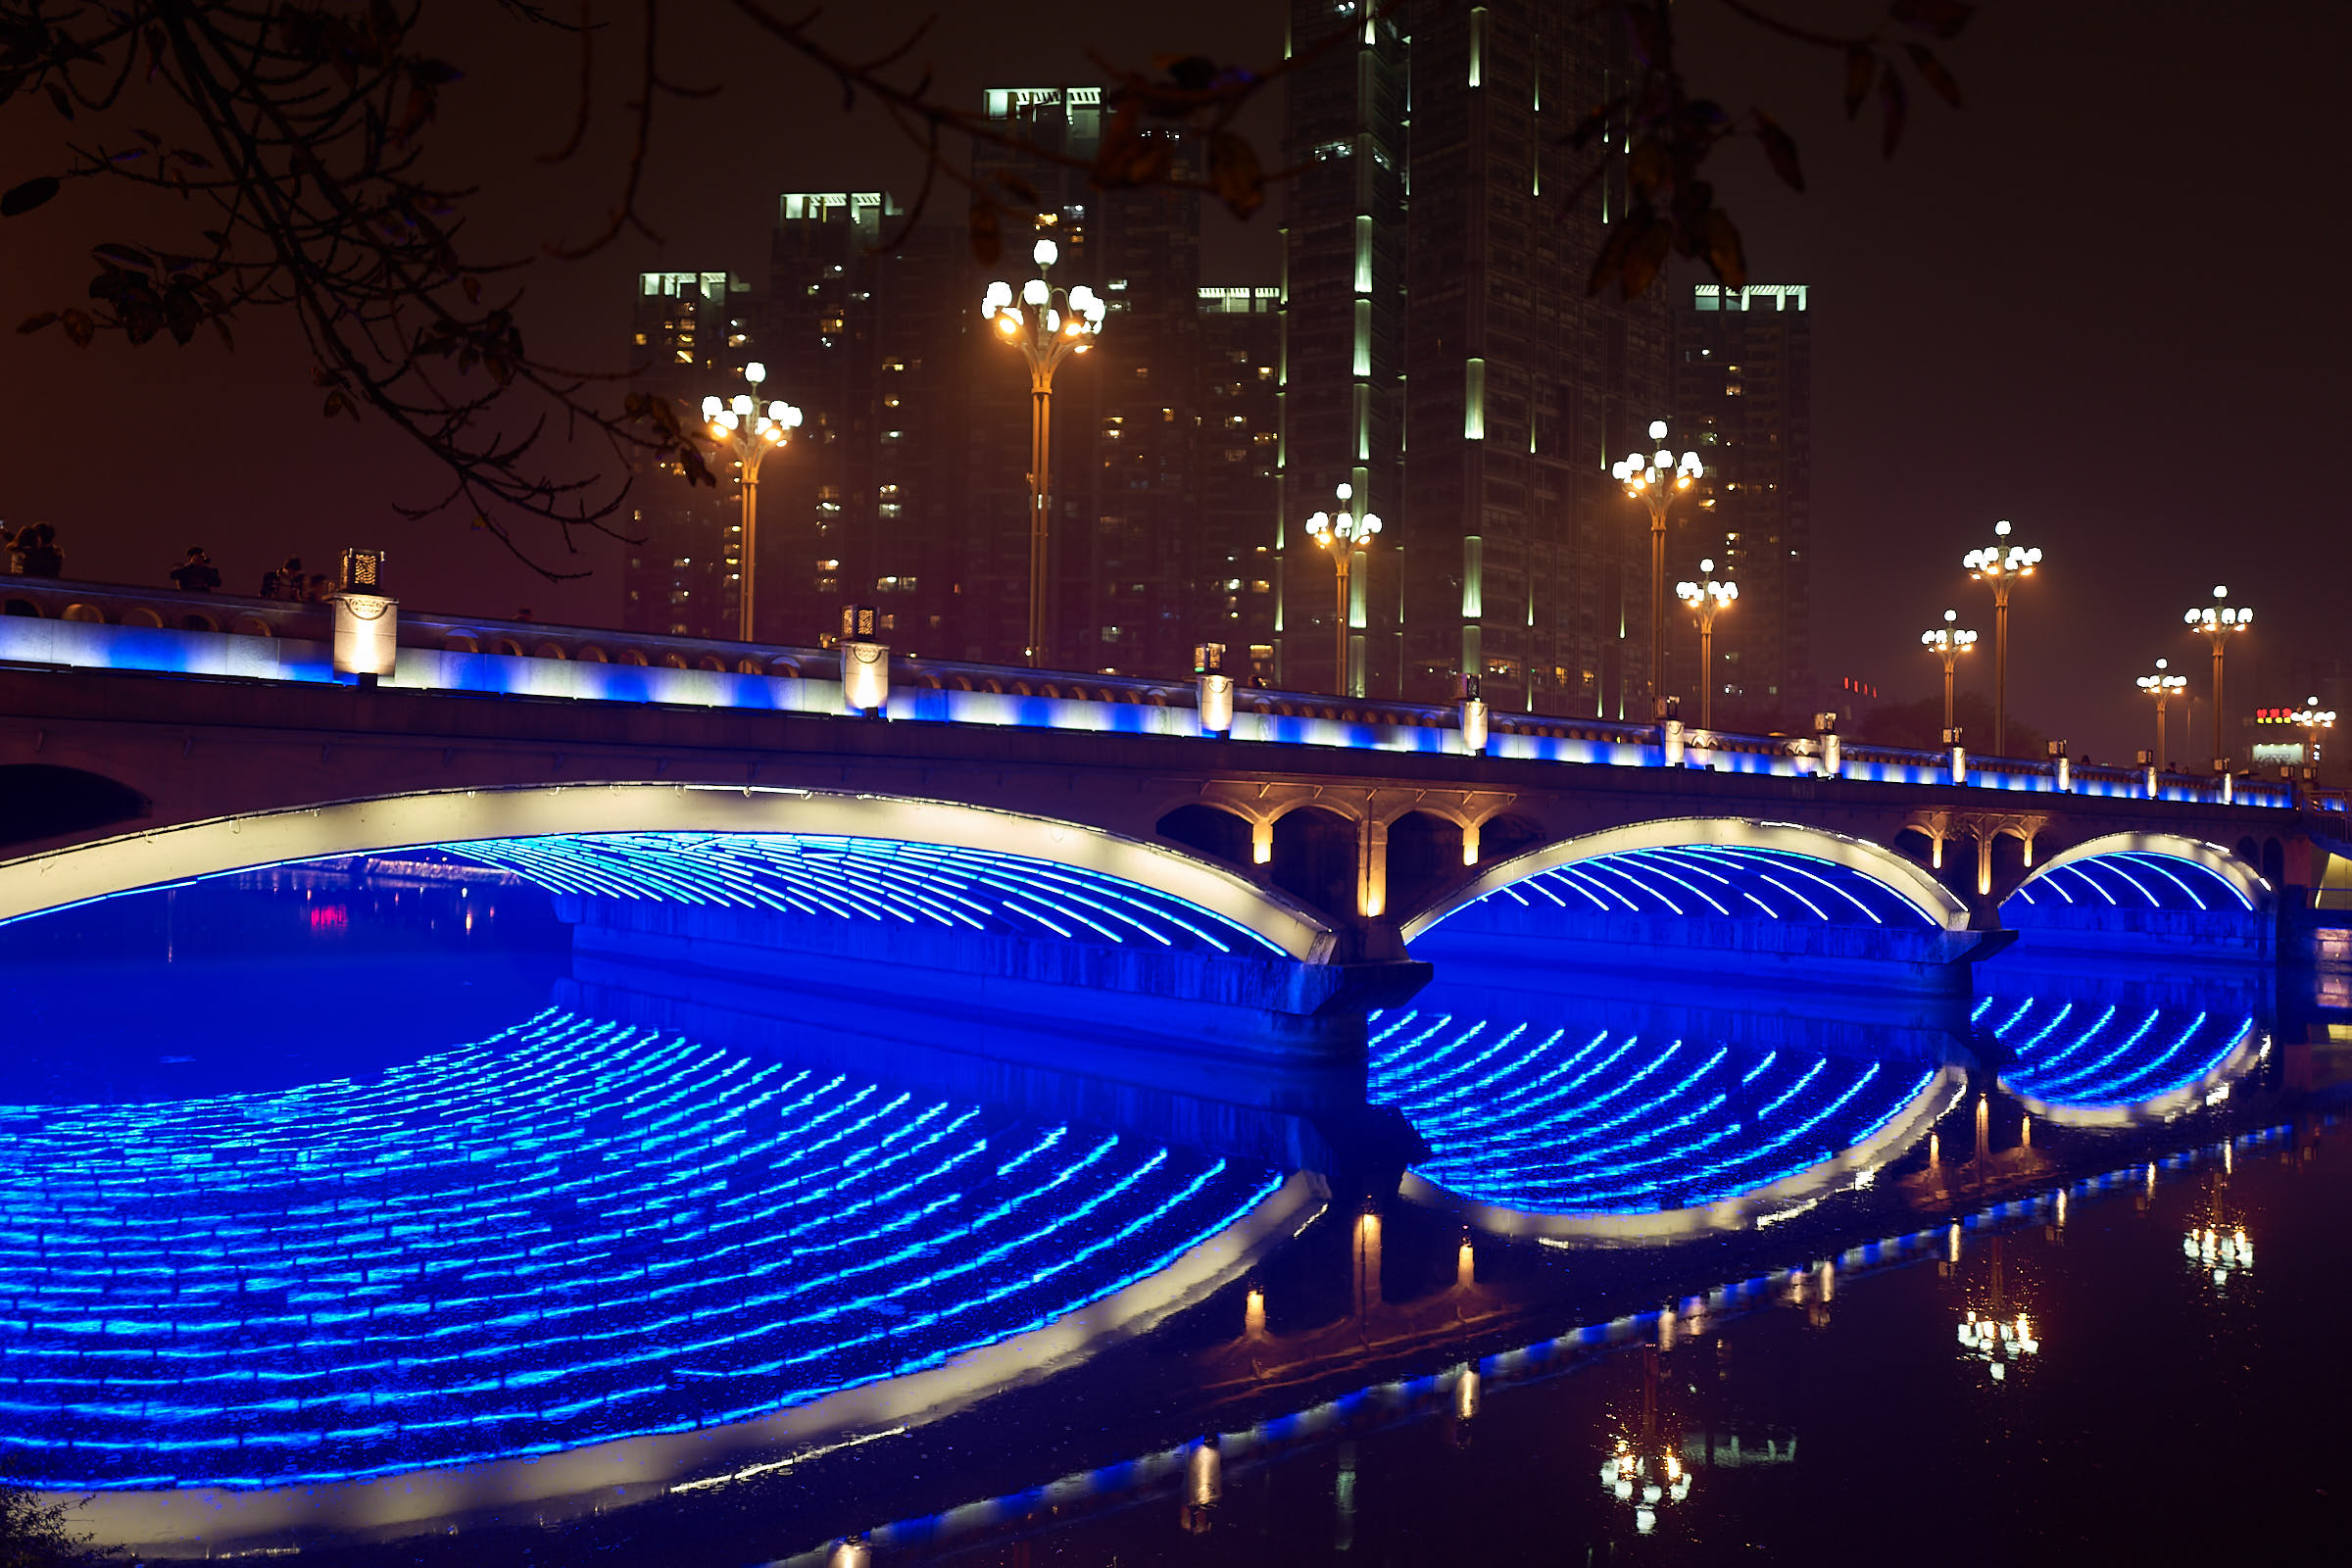 Bridge in Chengdu at night